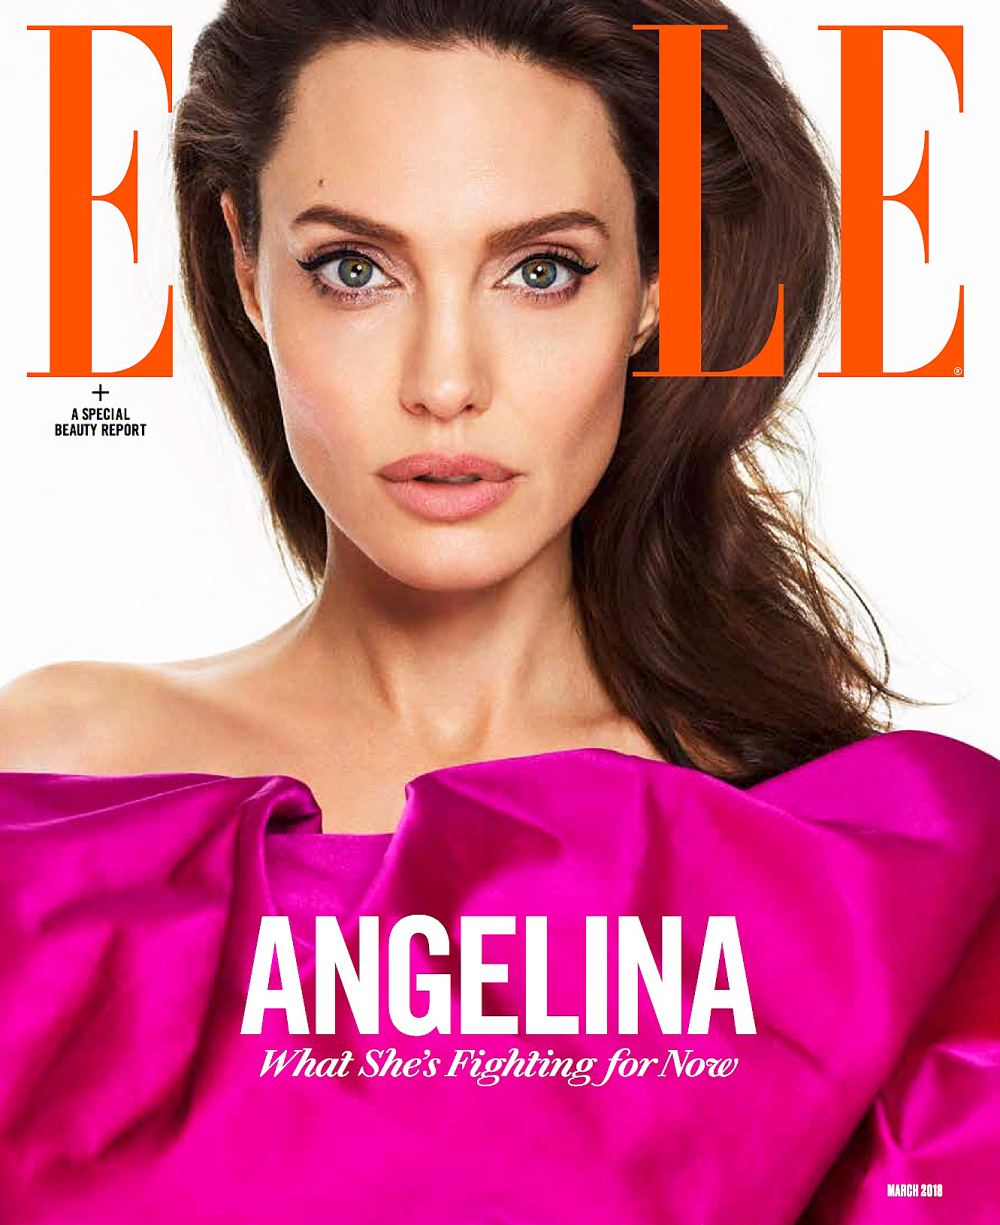 Angelina Jolie Elle cover